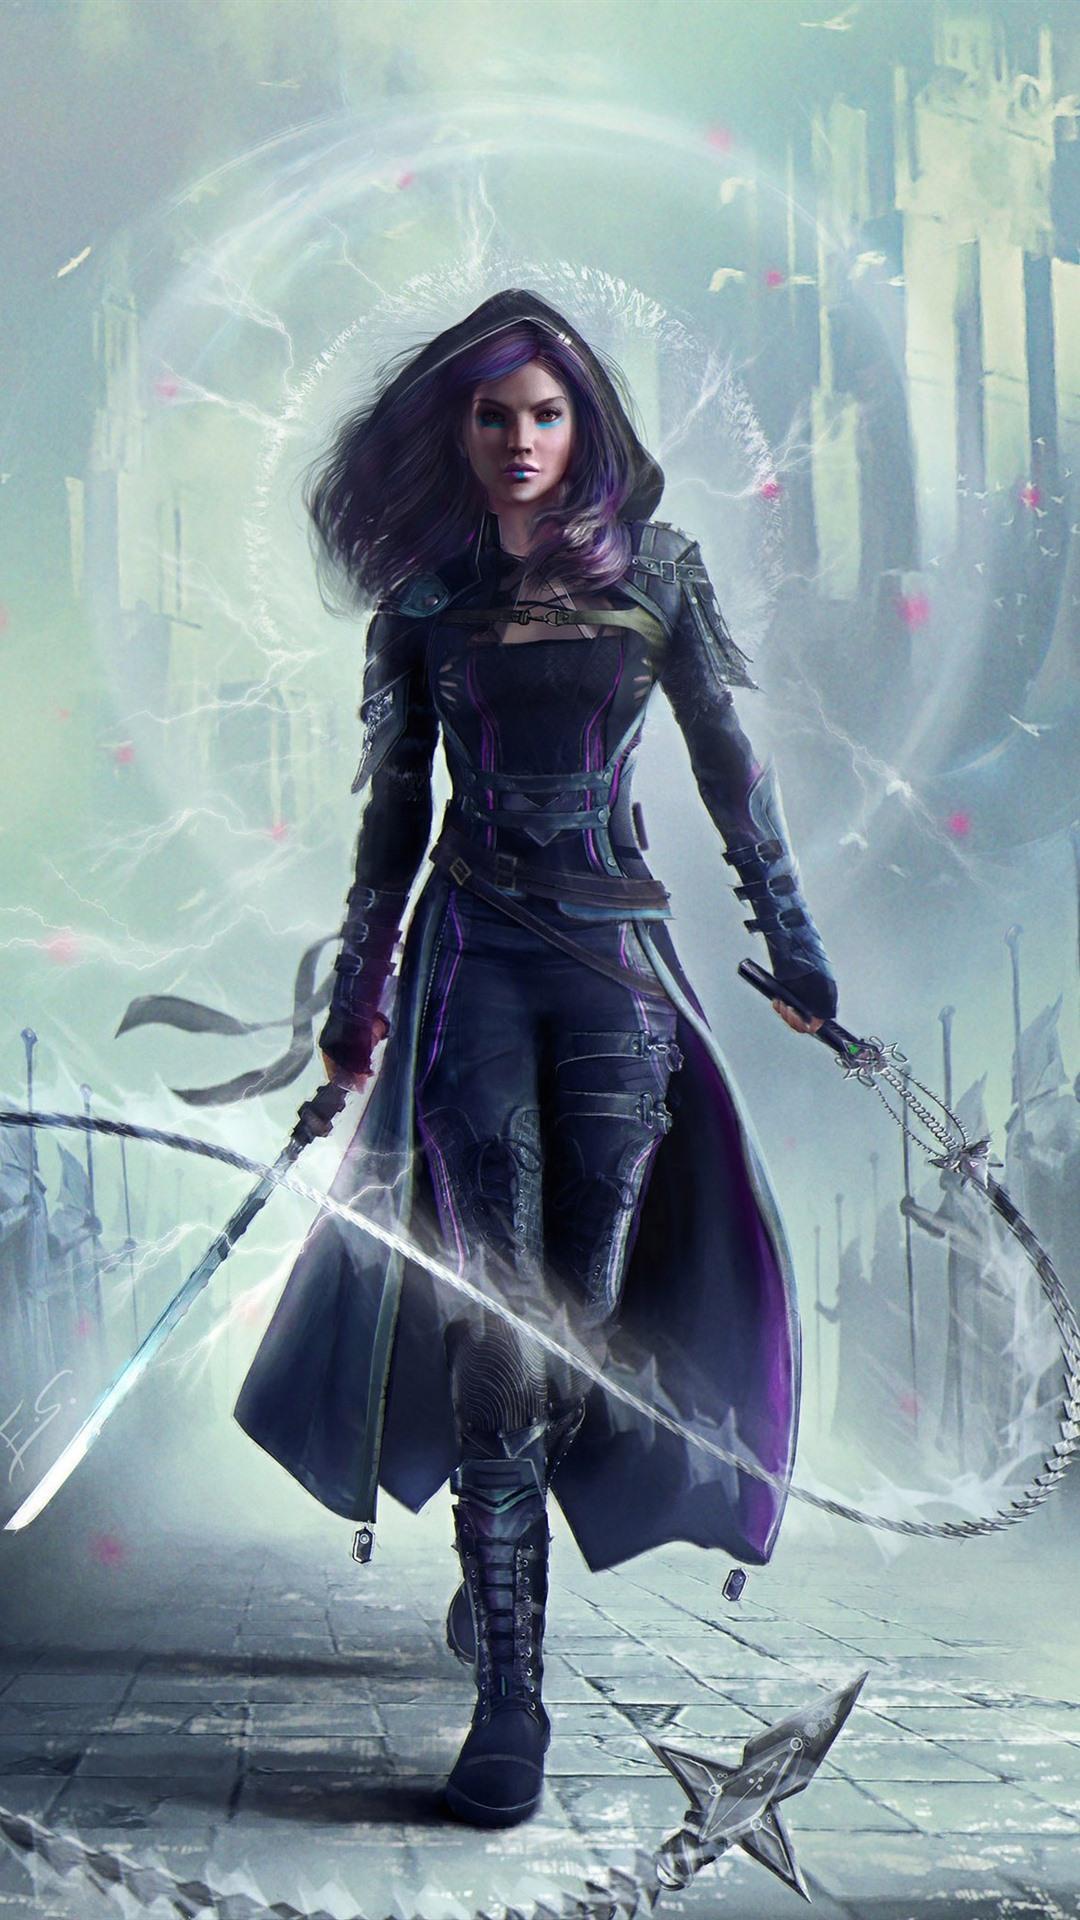 Purple Hair Fantasy Girl, Sword, Whip 1080x1920 IPhone 8 7 6